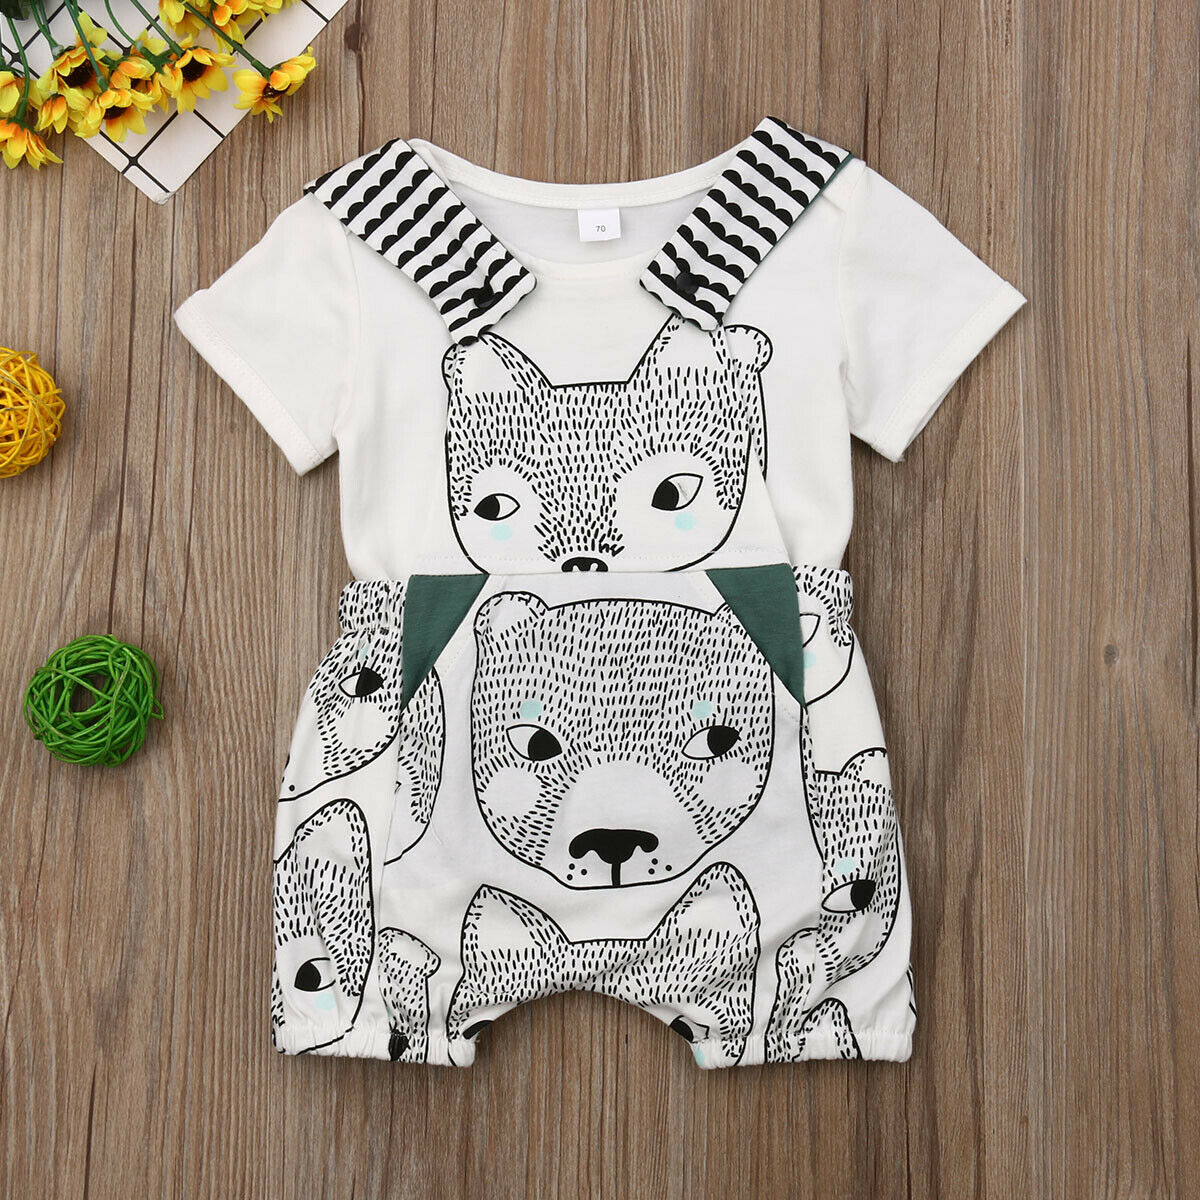 2019 Children Summer Clothing Newborn Toddler Baby Boys Girls Cartoon Print Casual T-shirt+Bib Pant overalls Shorts 2Pcs Set